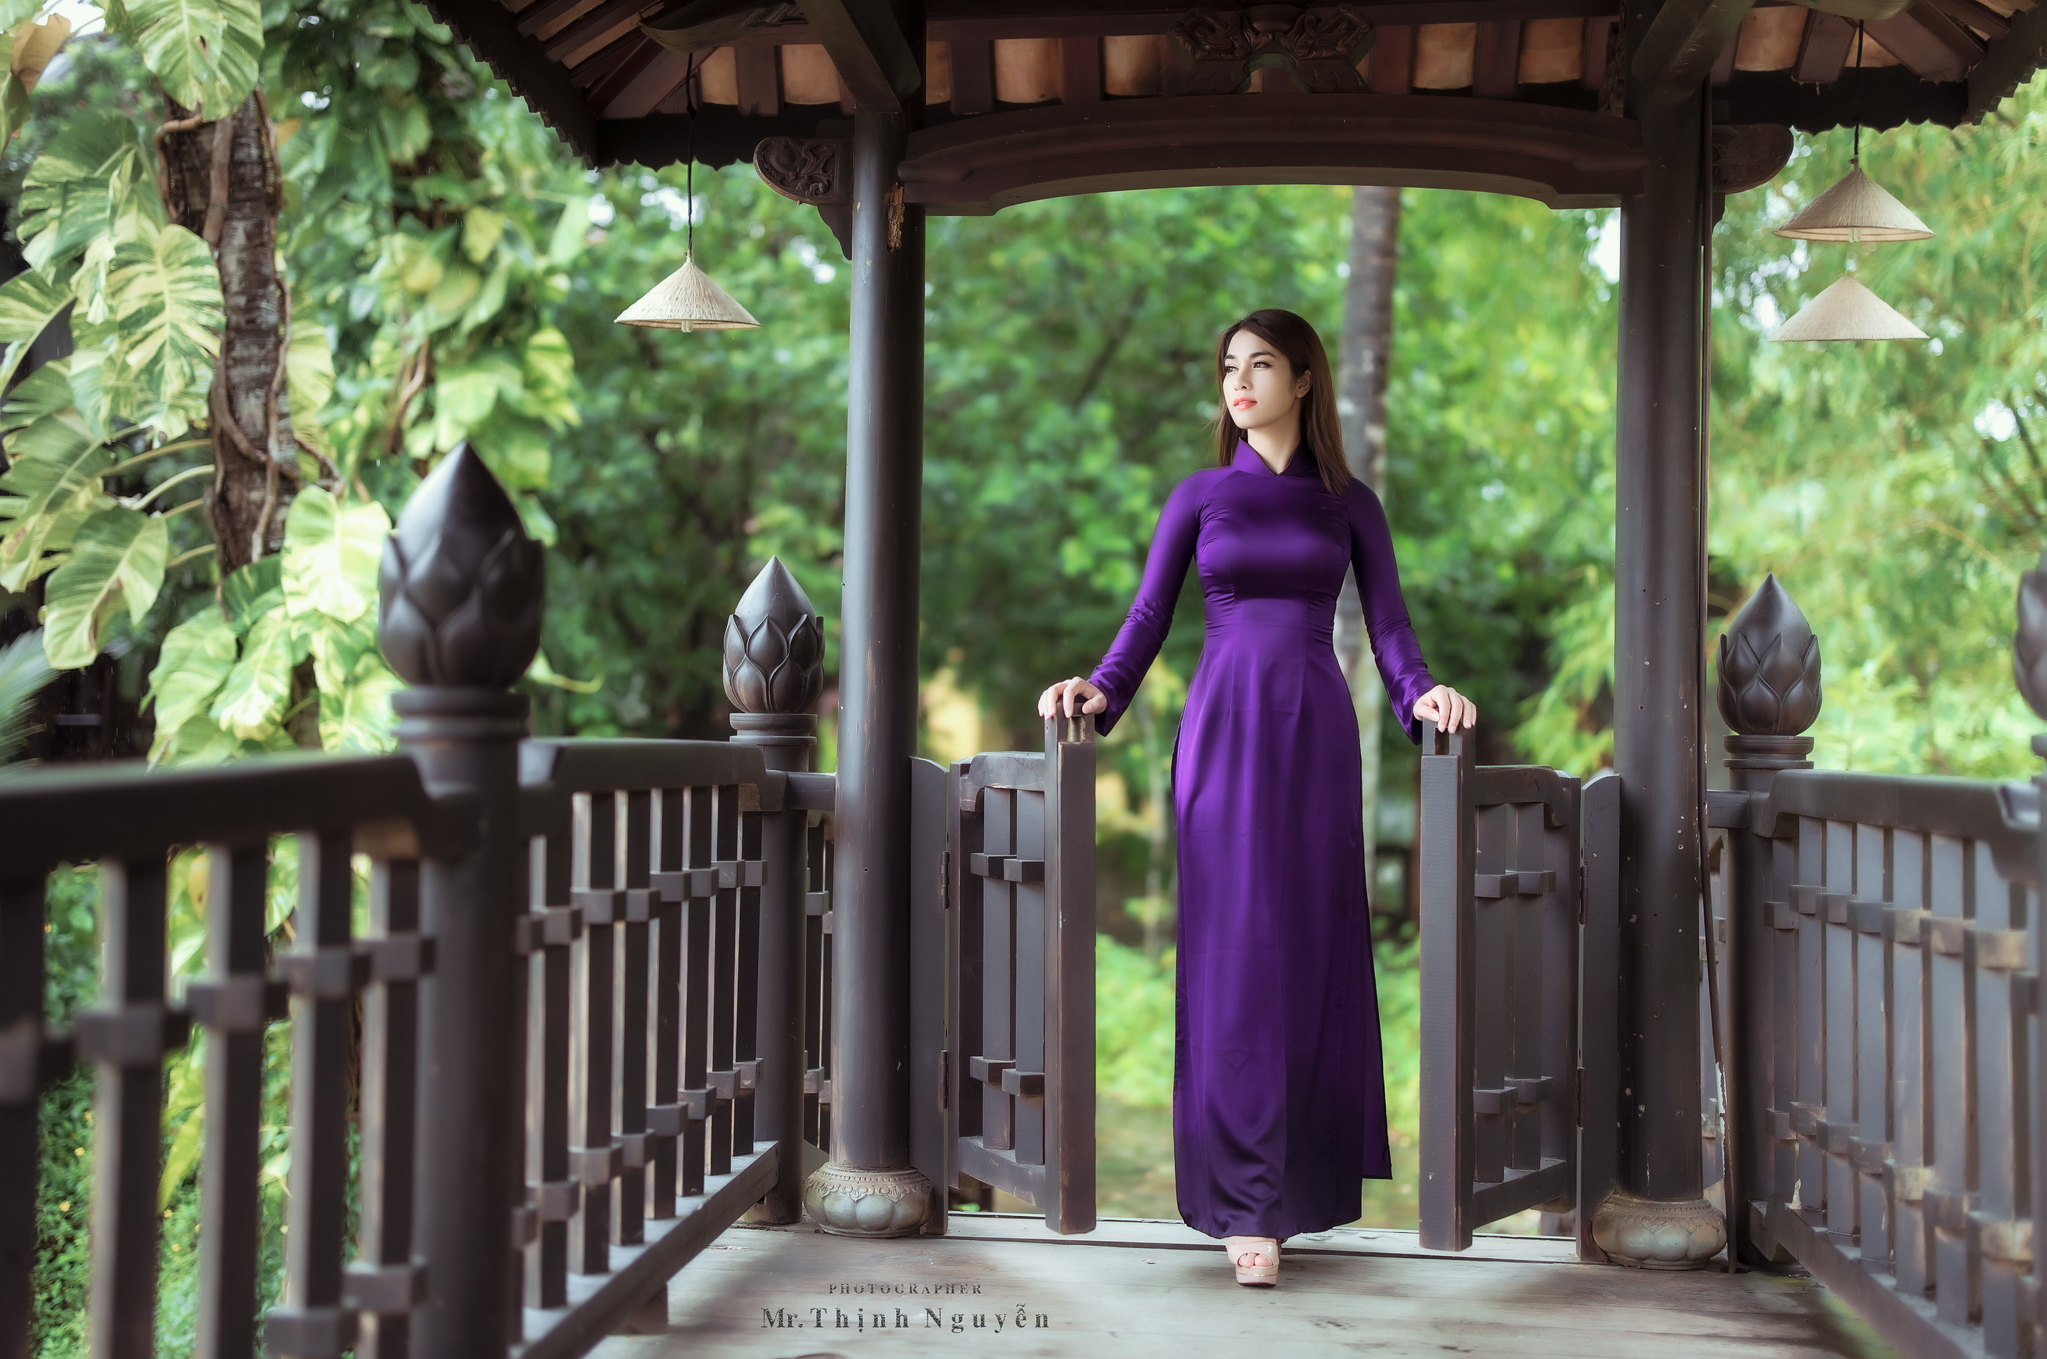 Asian Model Women Long Hair Brunette Violet Dress Traditional Clothing Pavilion 2047x1359